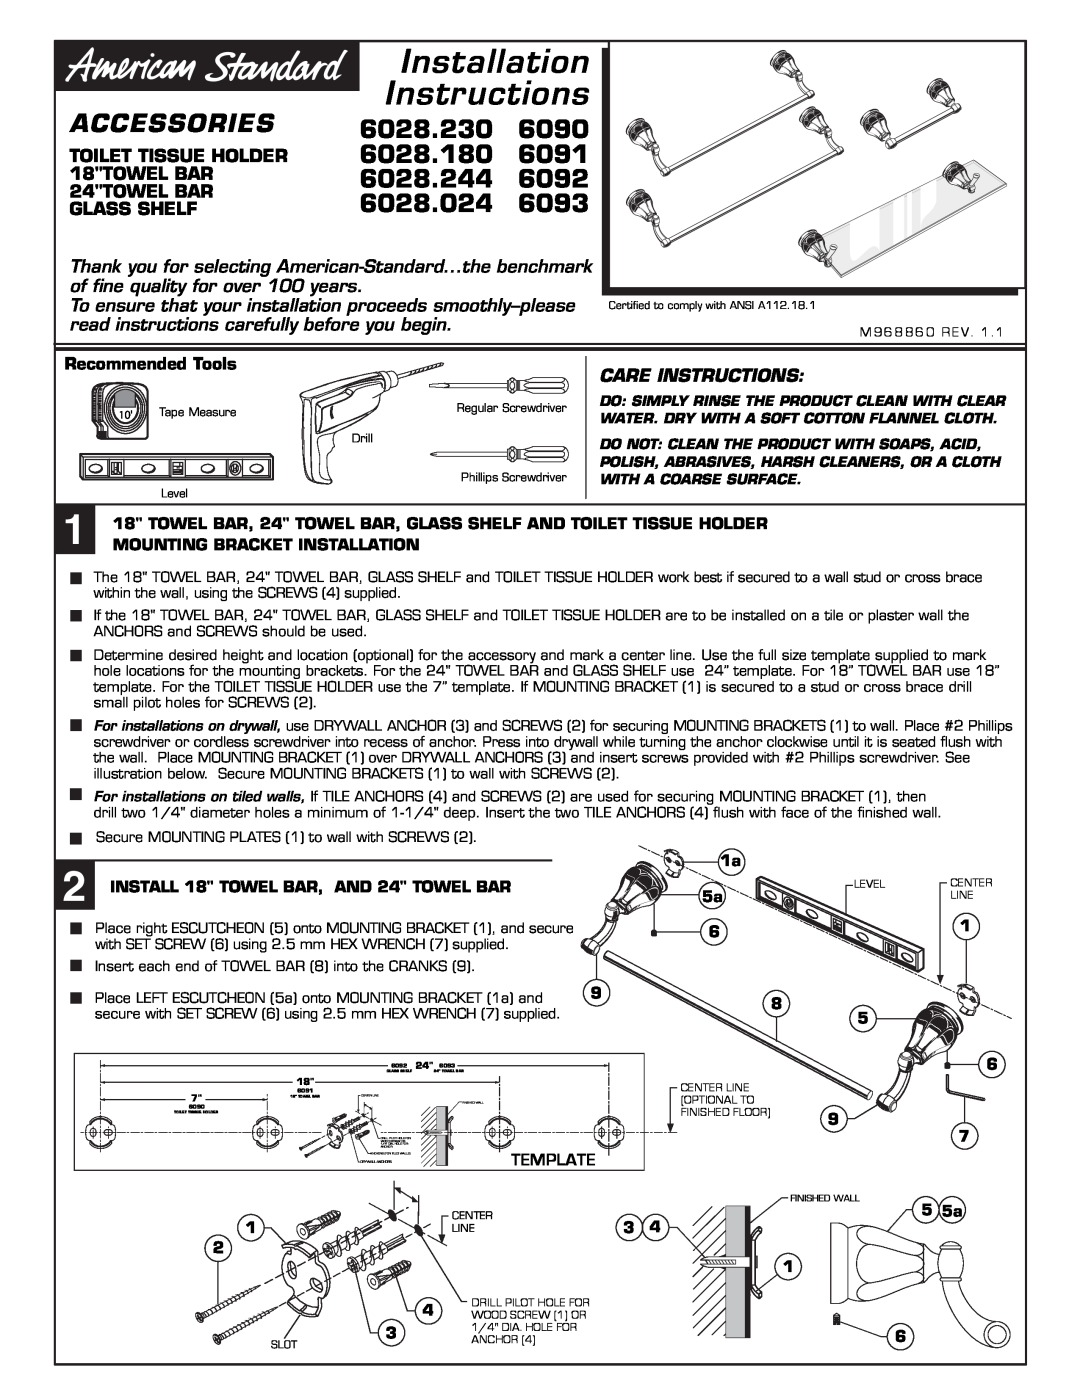 American Standard 6028.244 installation instructions Installation, Instructions, Accessories, 6028.230, 6090, 6028.180 